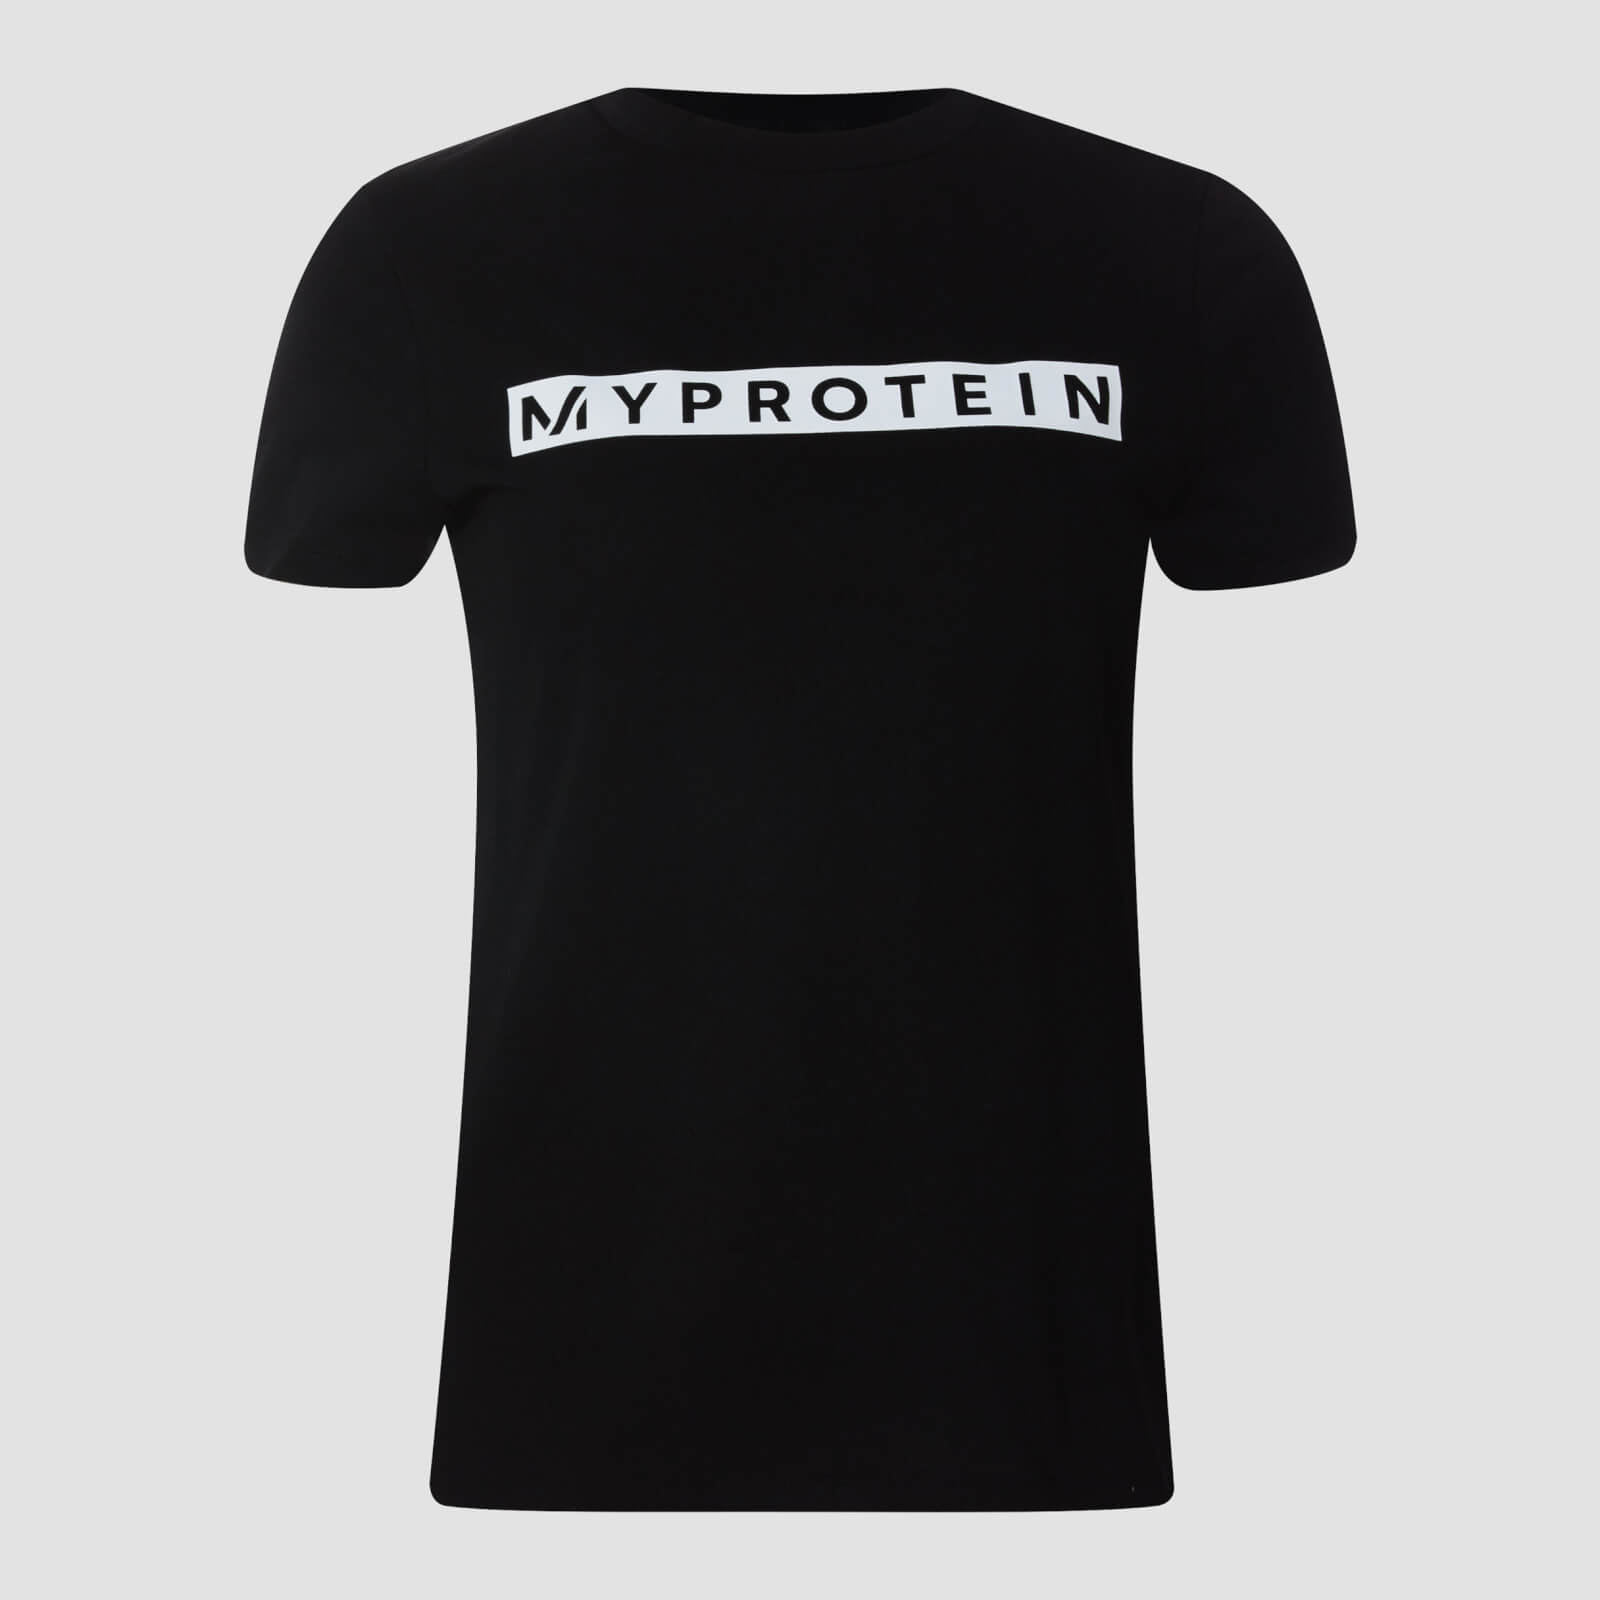 Myprotein Camiseta Originals de Mujer - Negro - XL